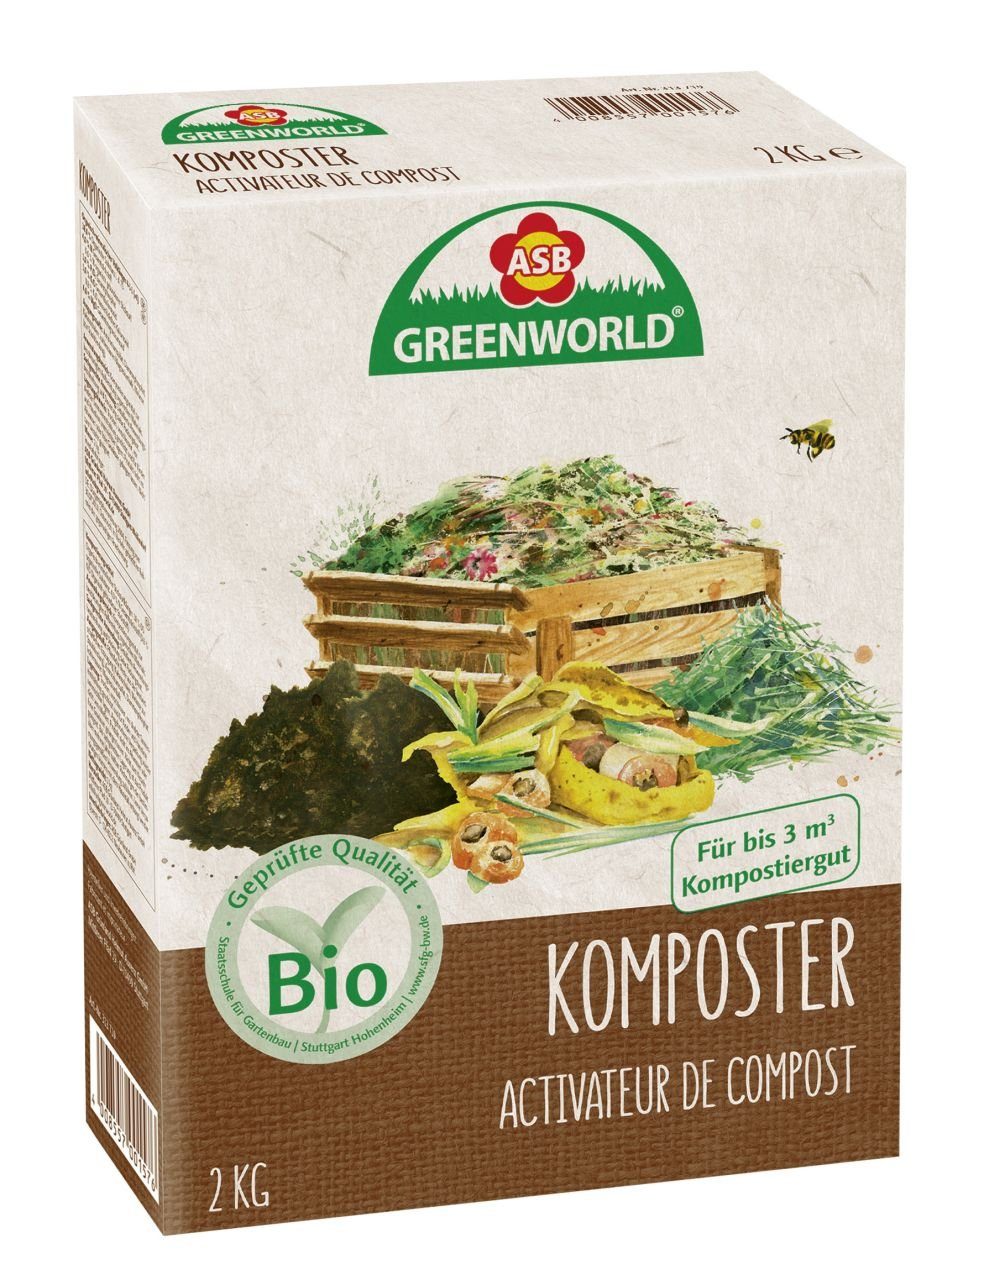 ASB Greenworld Komposter ASB Greenworld Bio Komposter 2 kg